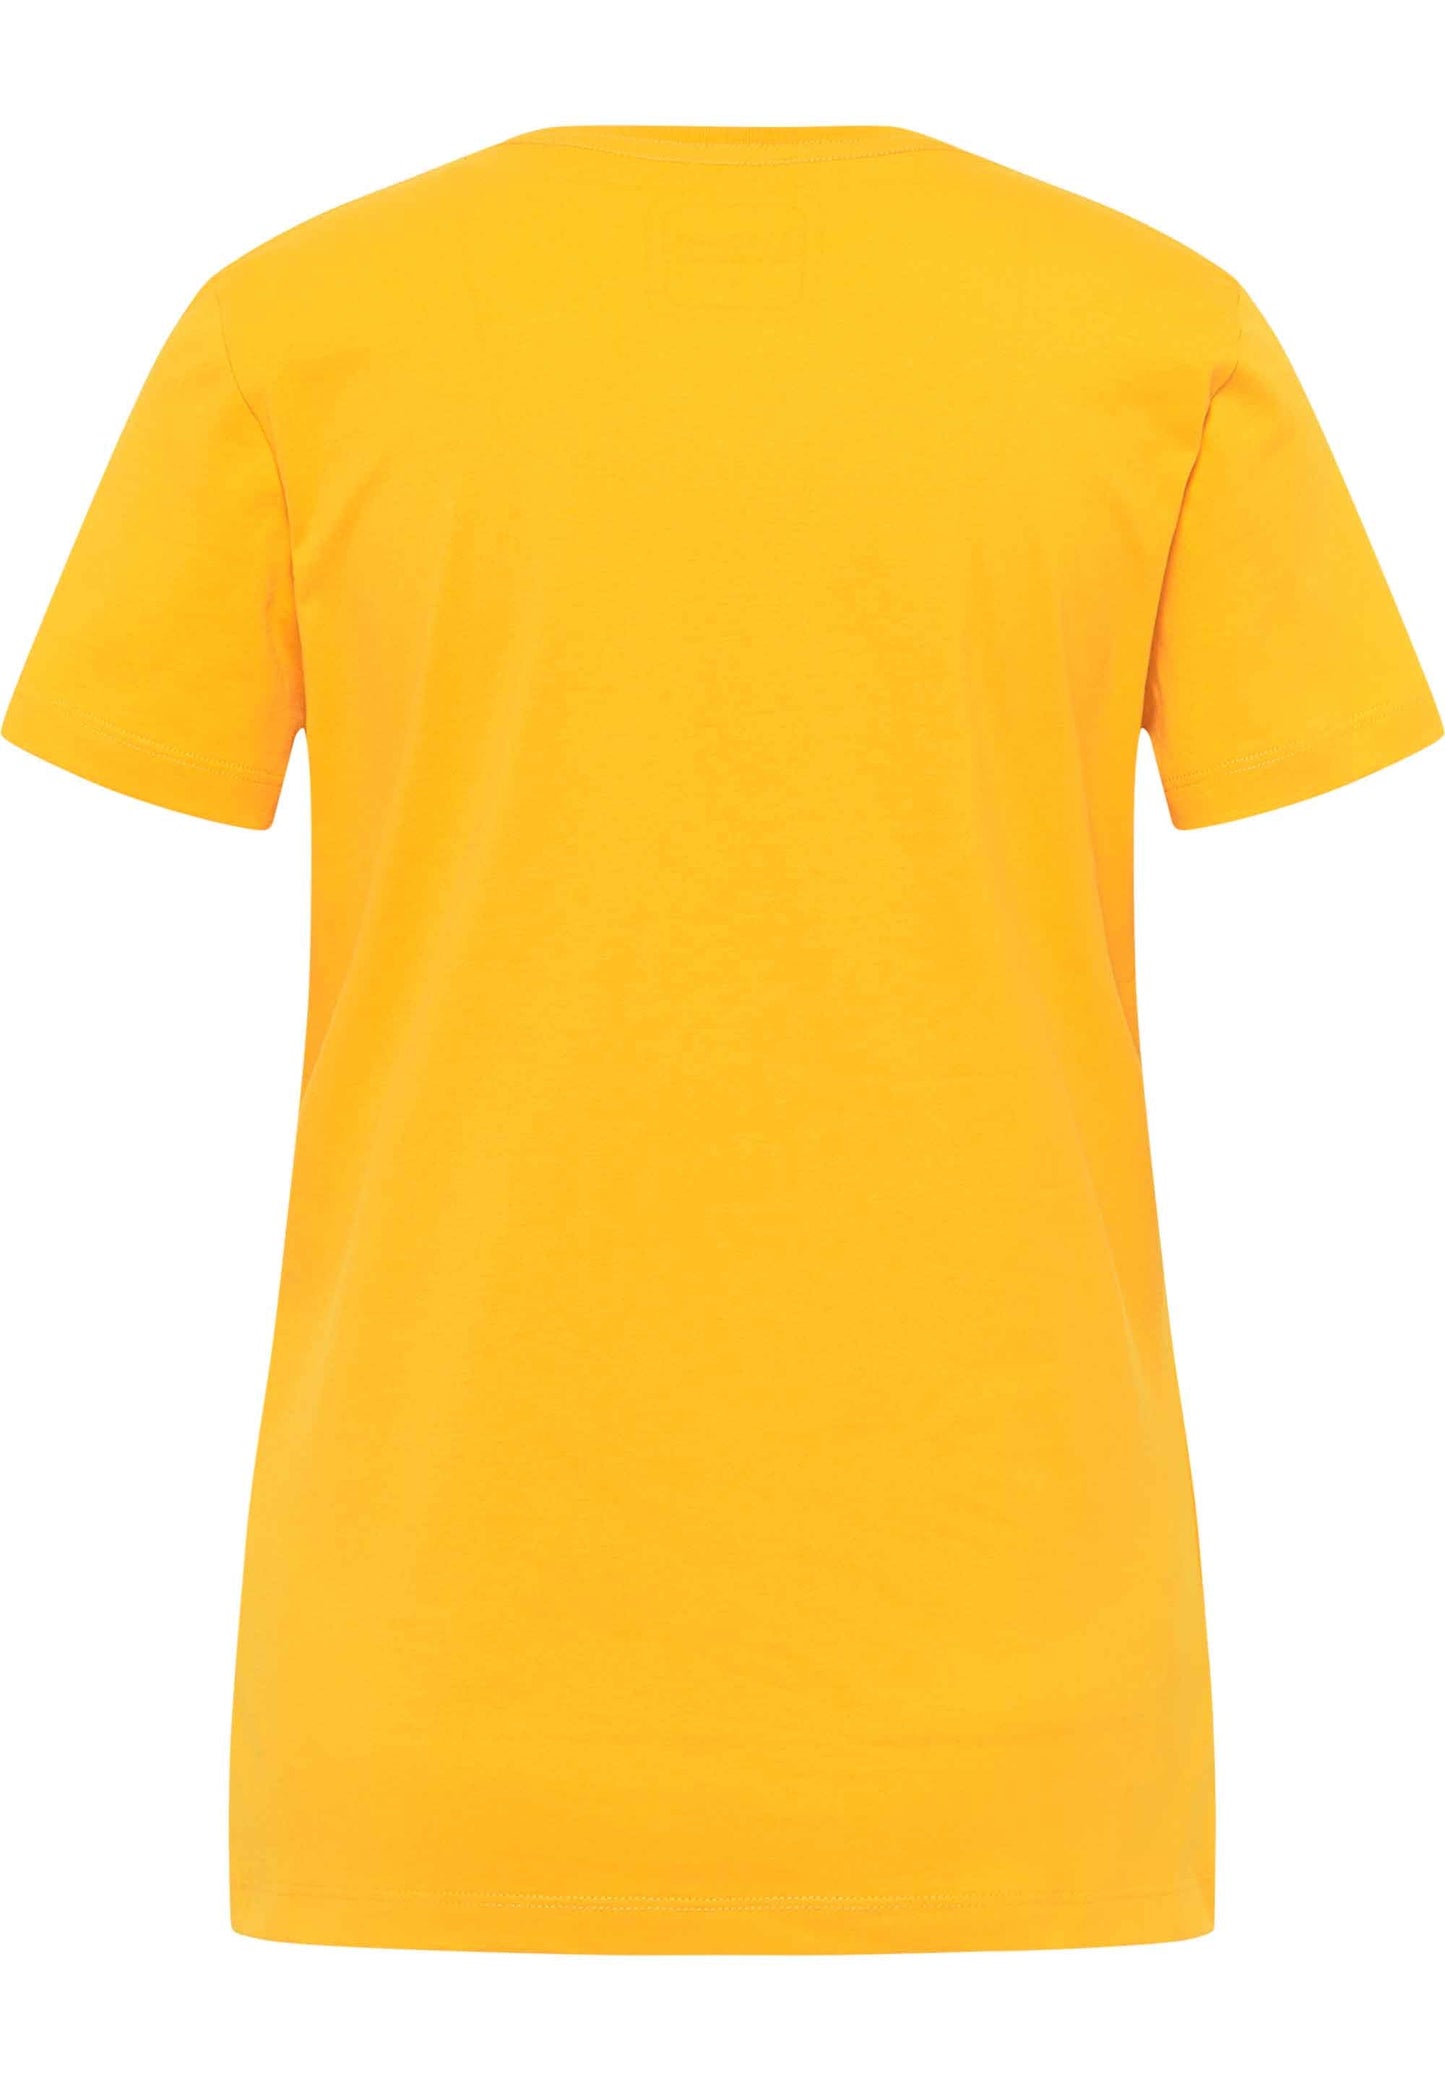 SOMWR TRASHED T-Shirt YEL008